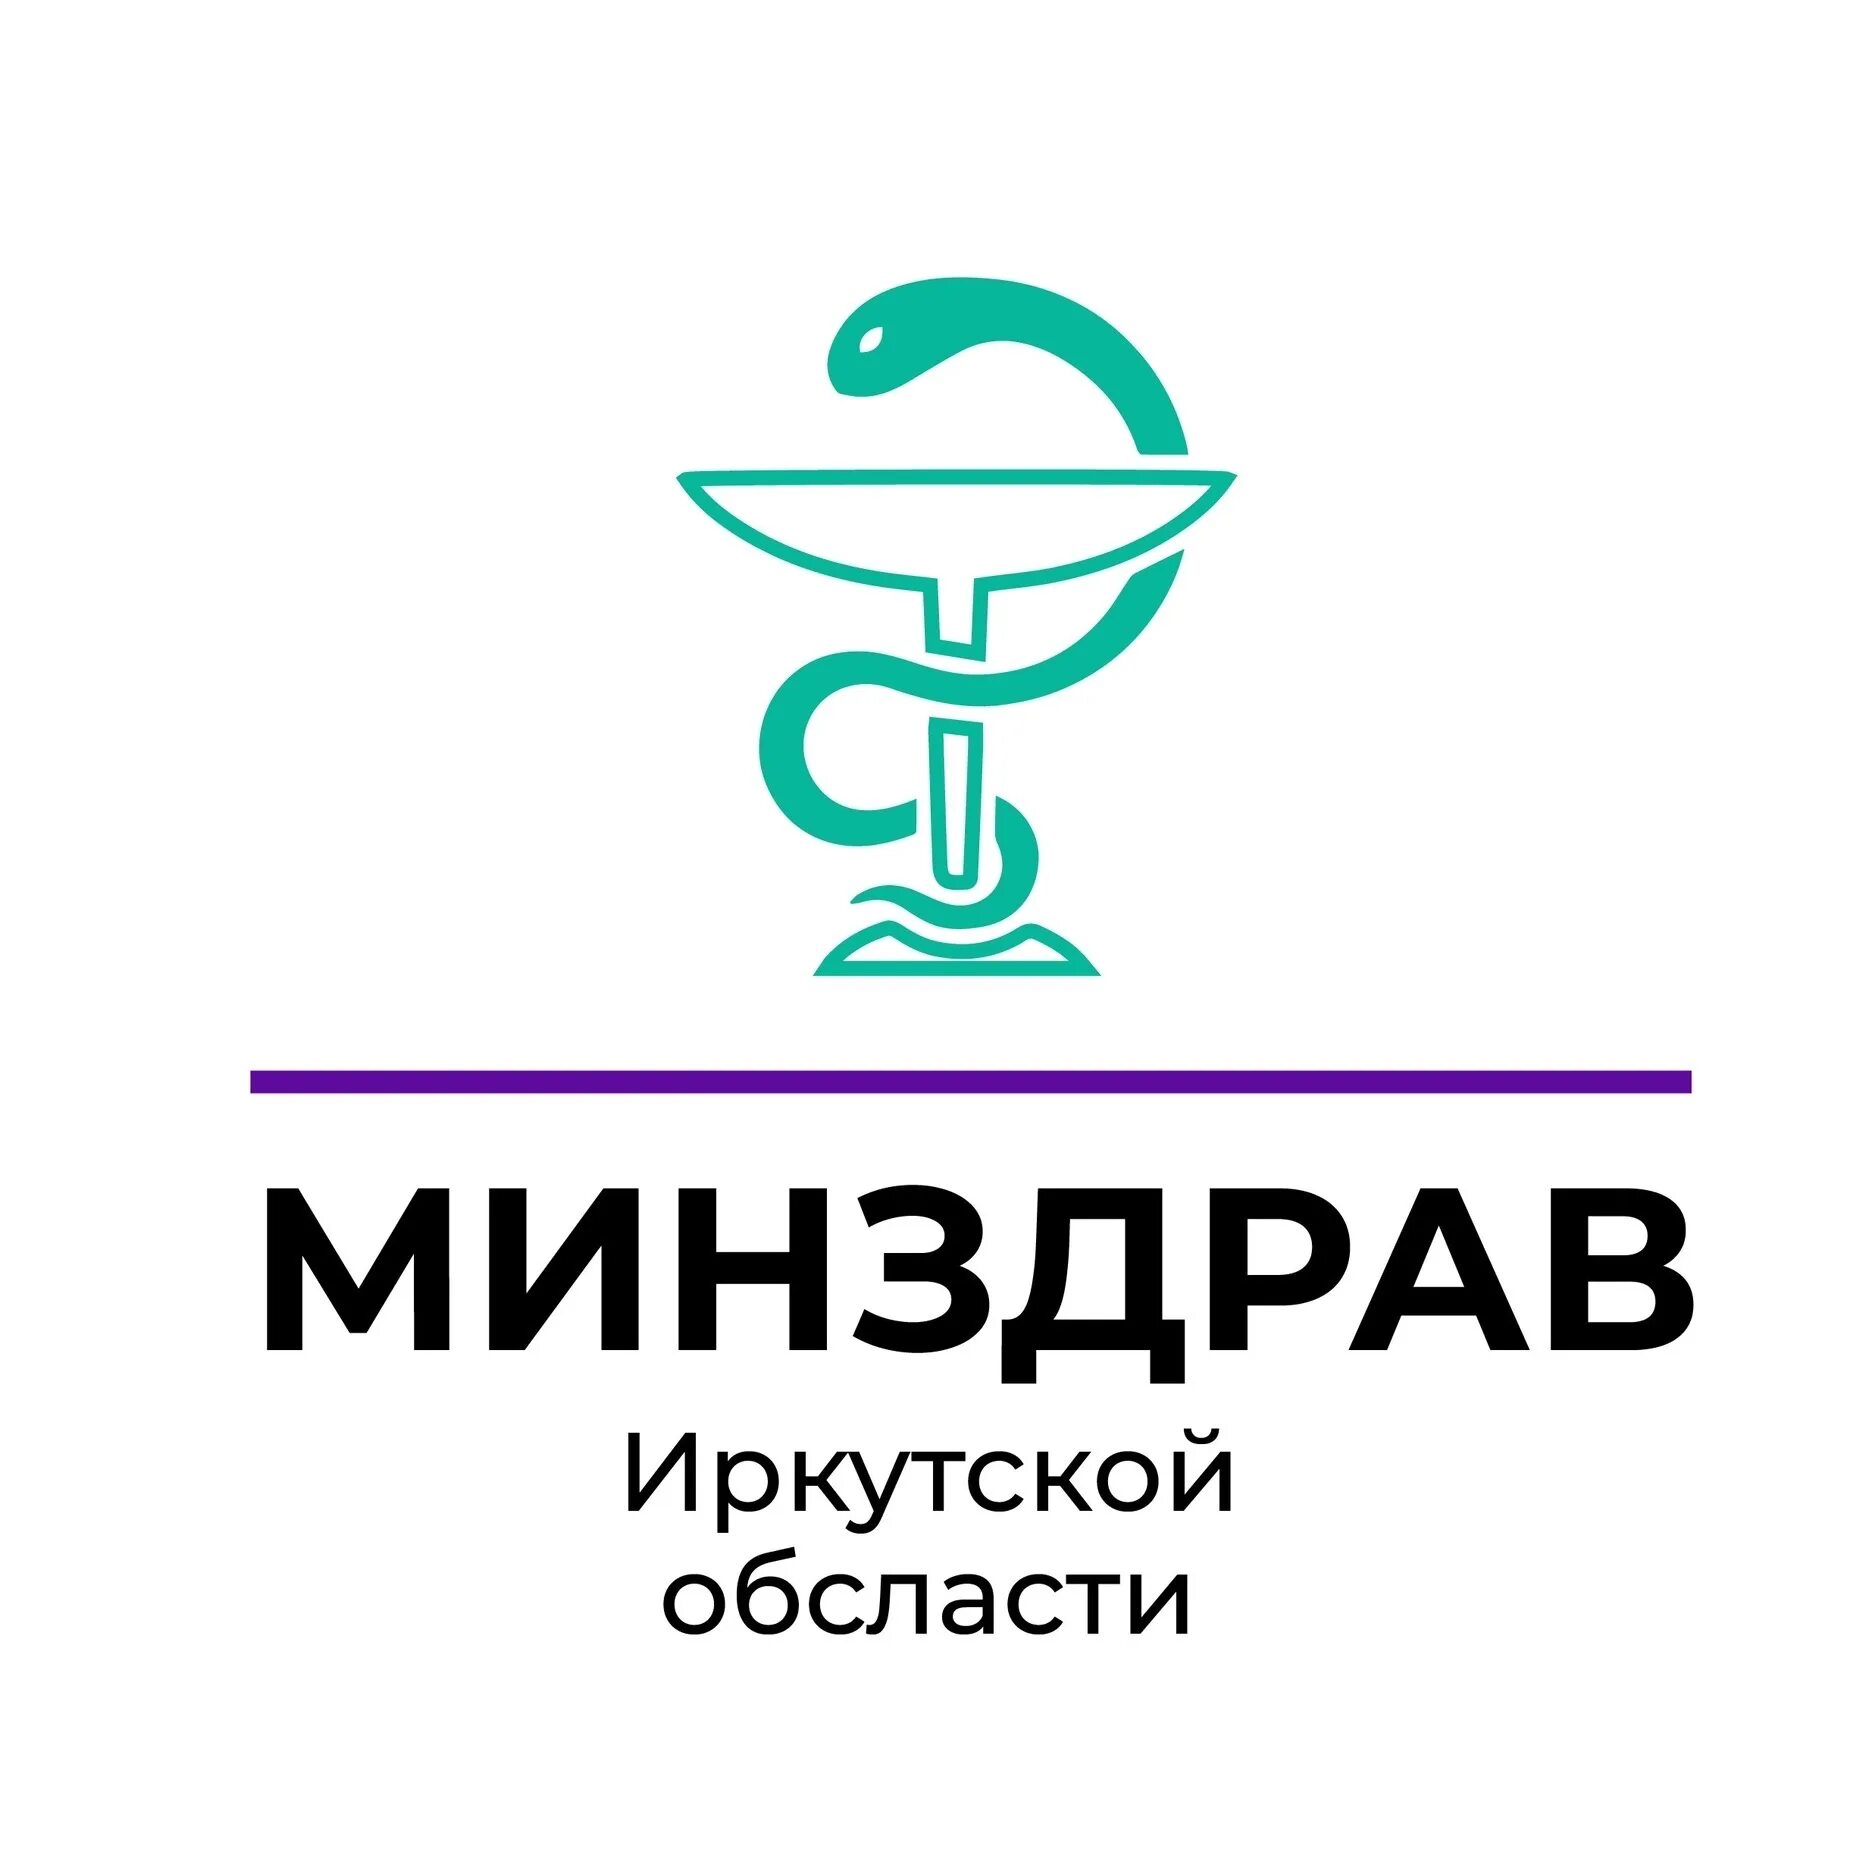 Министерство здравоохранения Иркутск. Минздрав Иркутской области лого.